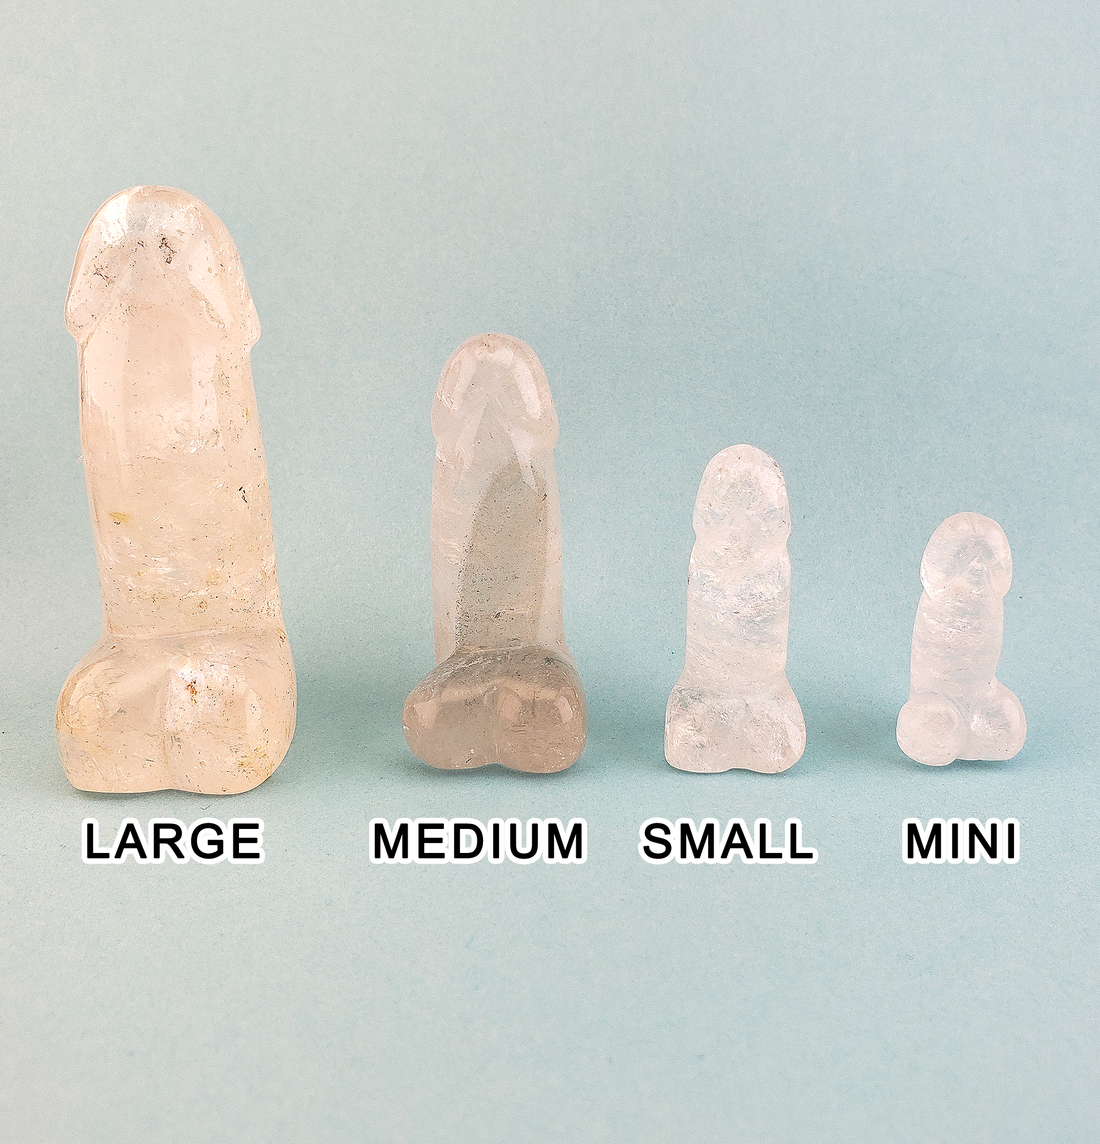 Big Dick Energy - Quartz Crystal Penis Power Totem Gift Box - Size Comparison